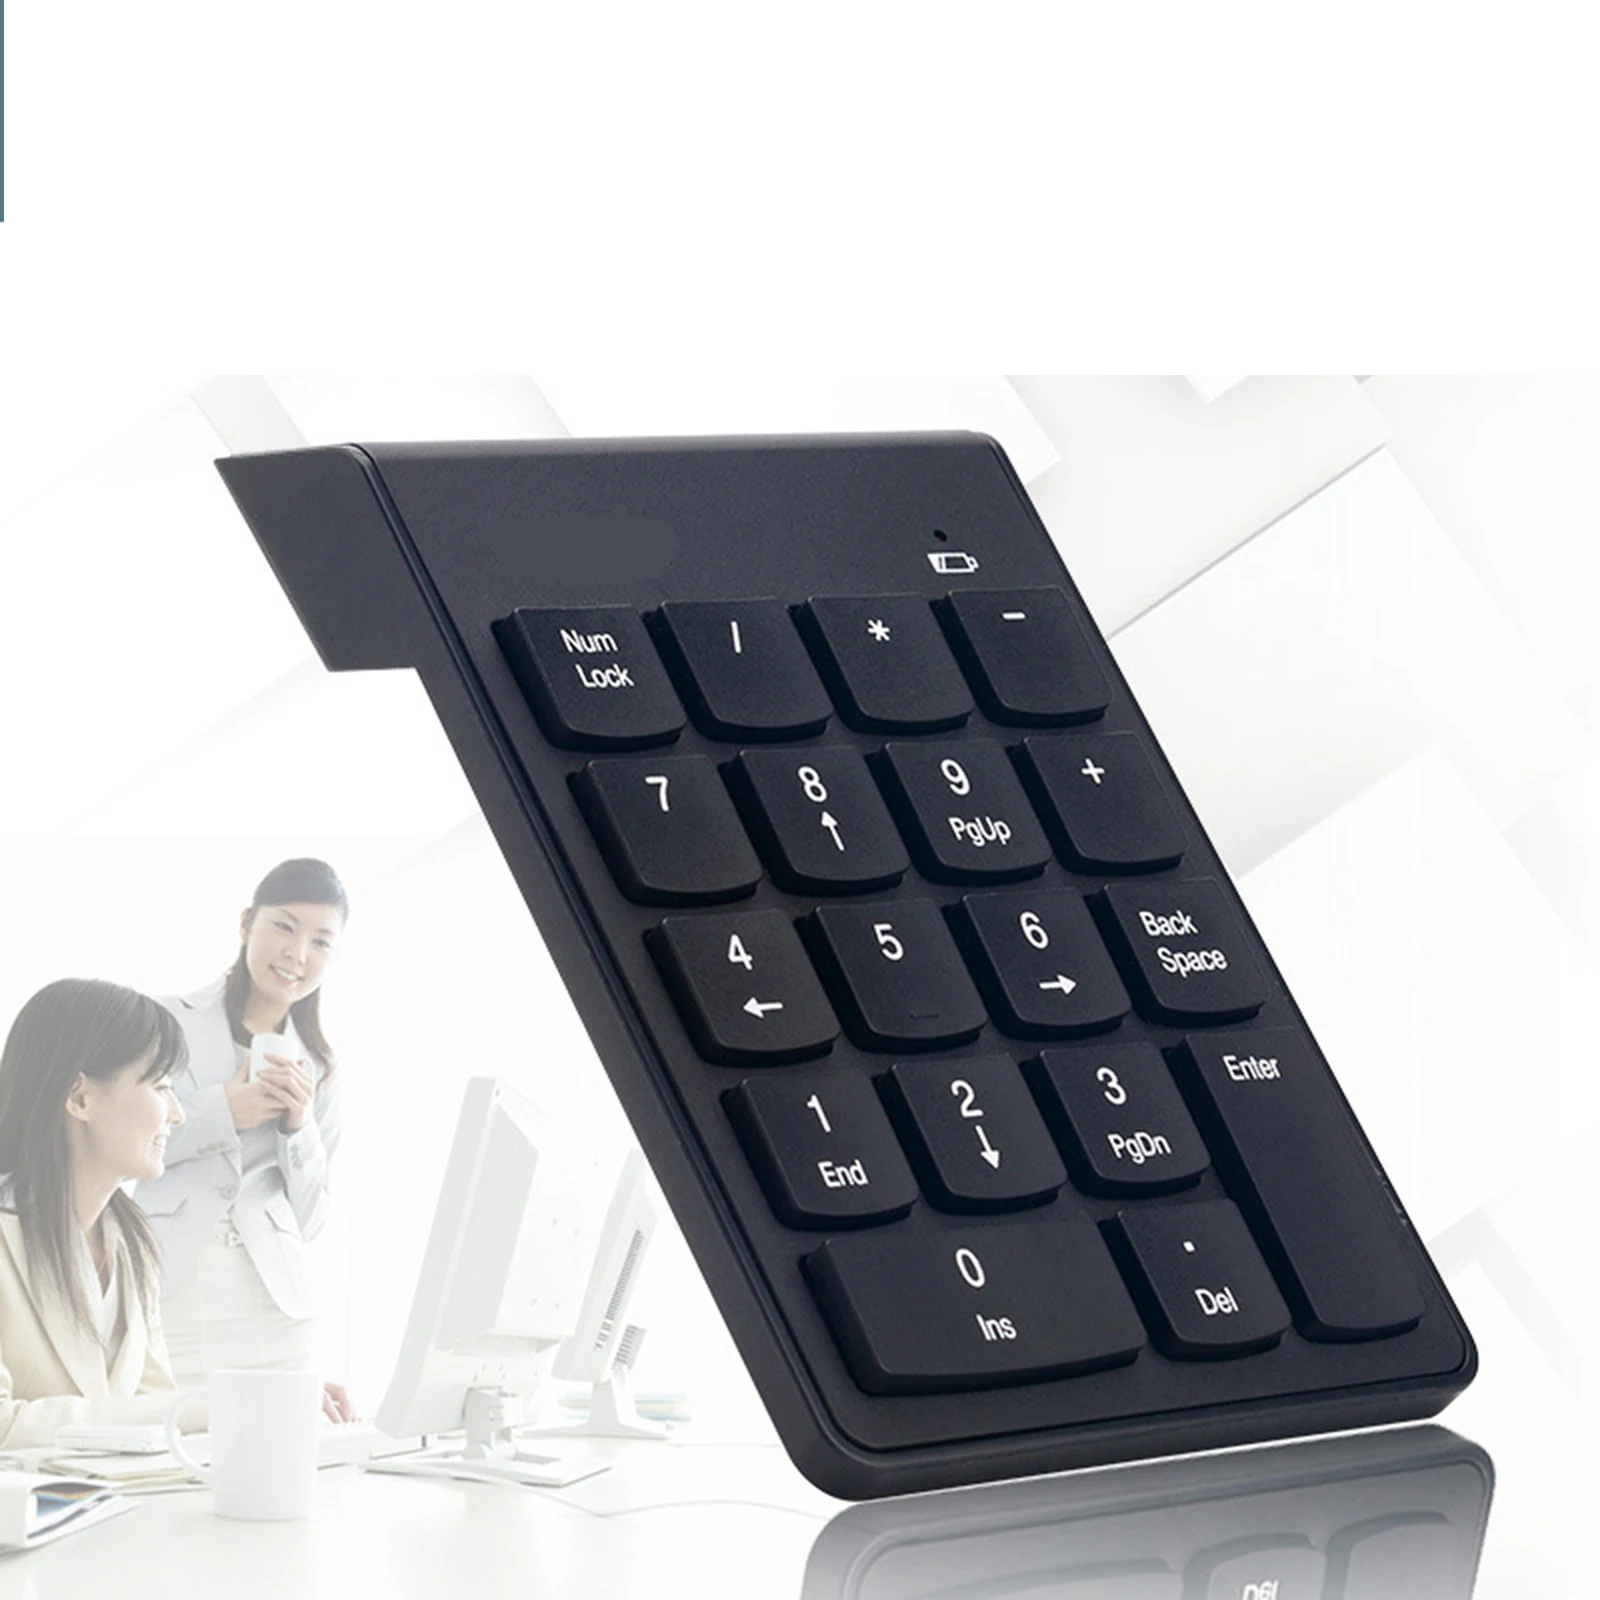 

New Wireless Number Pad 2.4GHz 18 Keys Numeric Keypad Financial Accounting Numpad For Laptop PC Desktop USB Numeric Keyboard